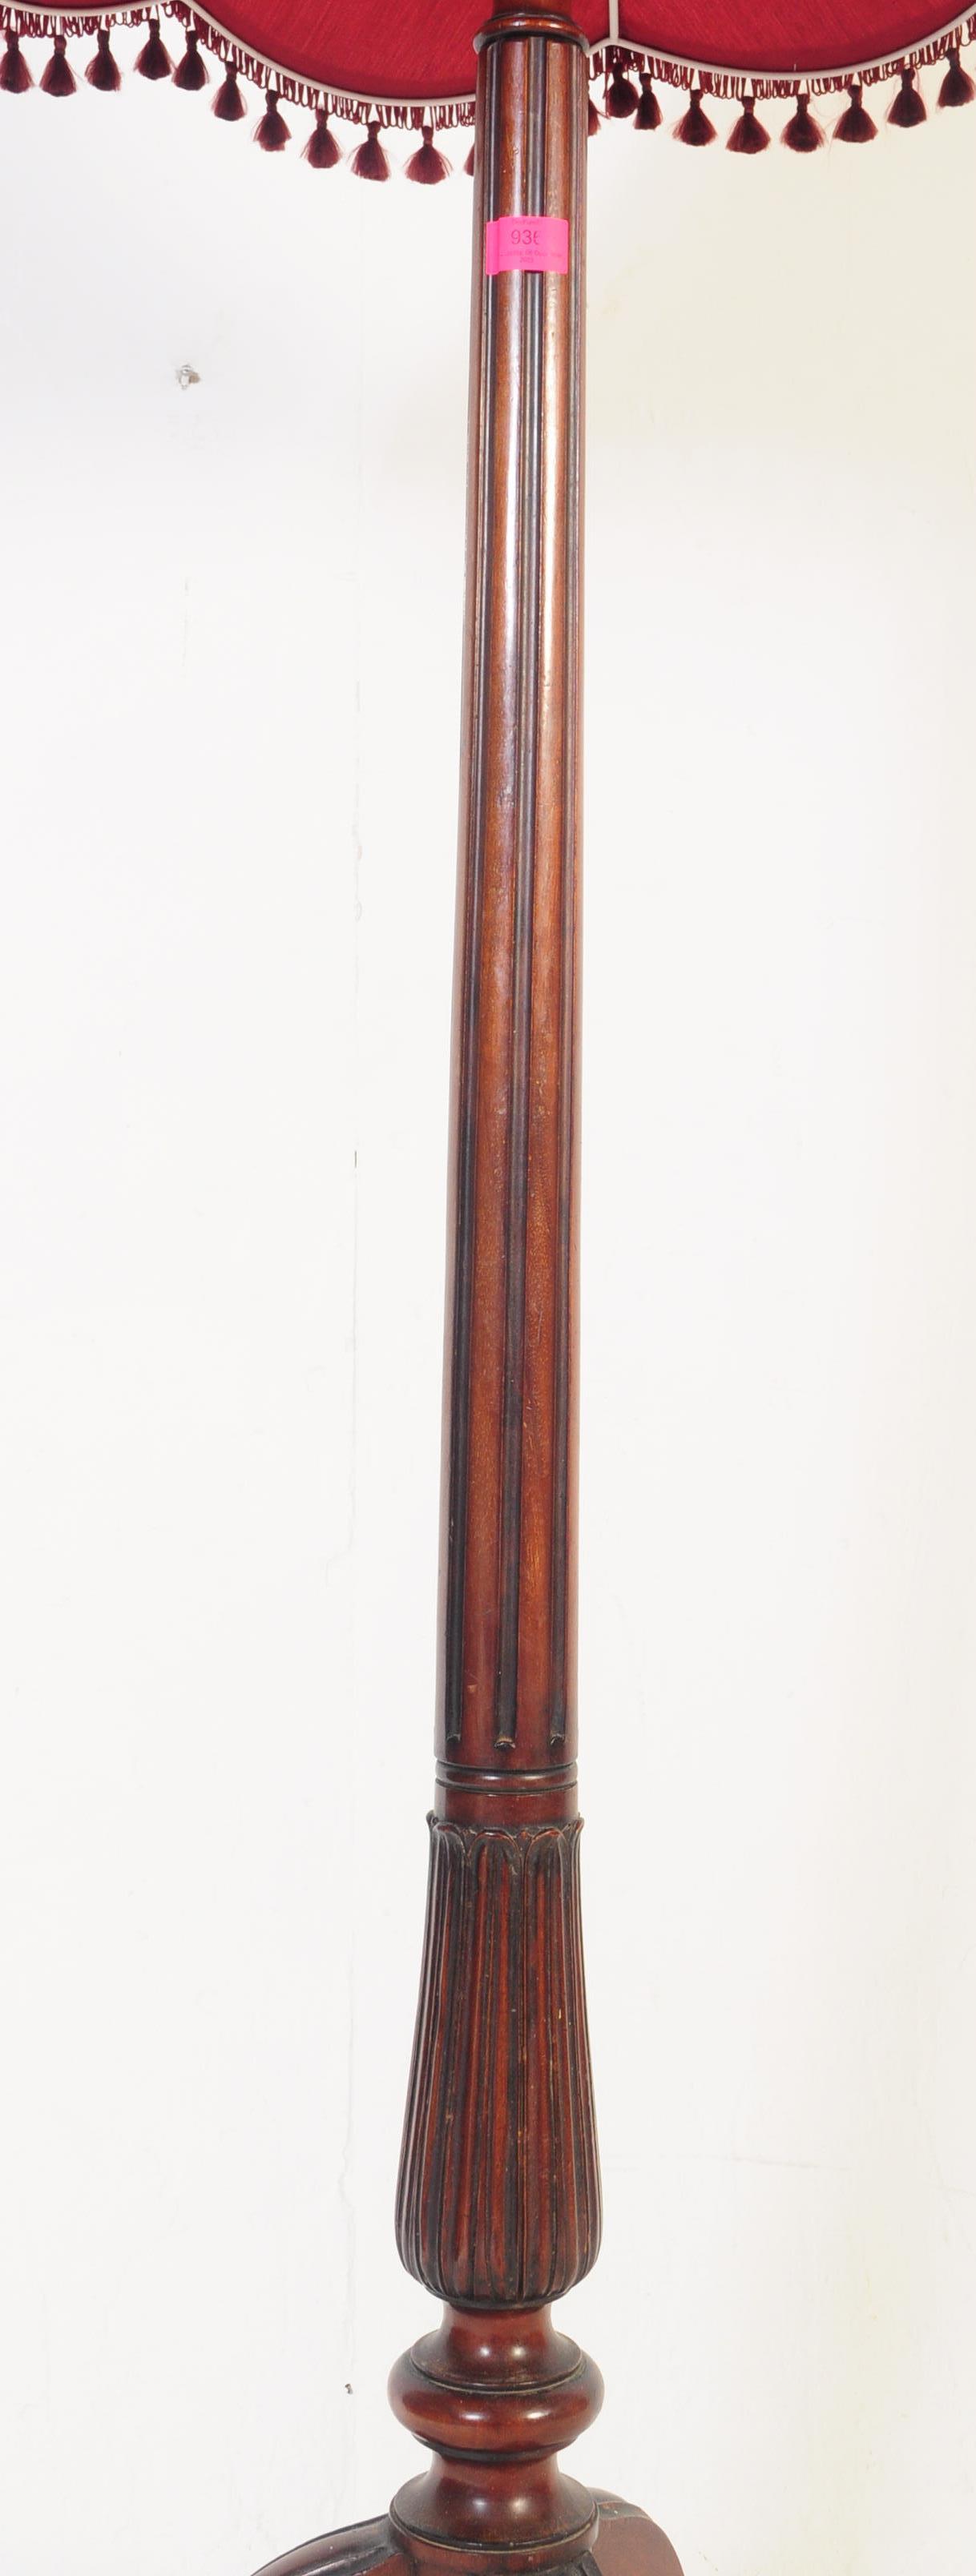 EDWARDIAN MAHOGANY REEDED FLOOR STANDARD LAMP - Image 3 of 6